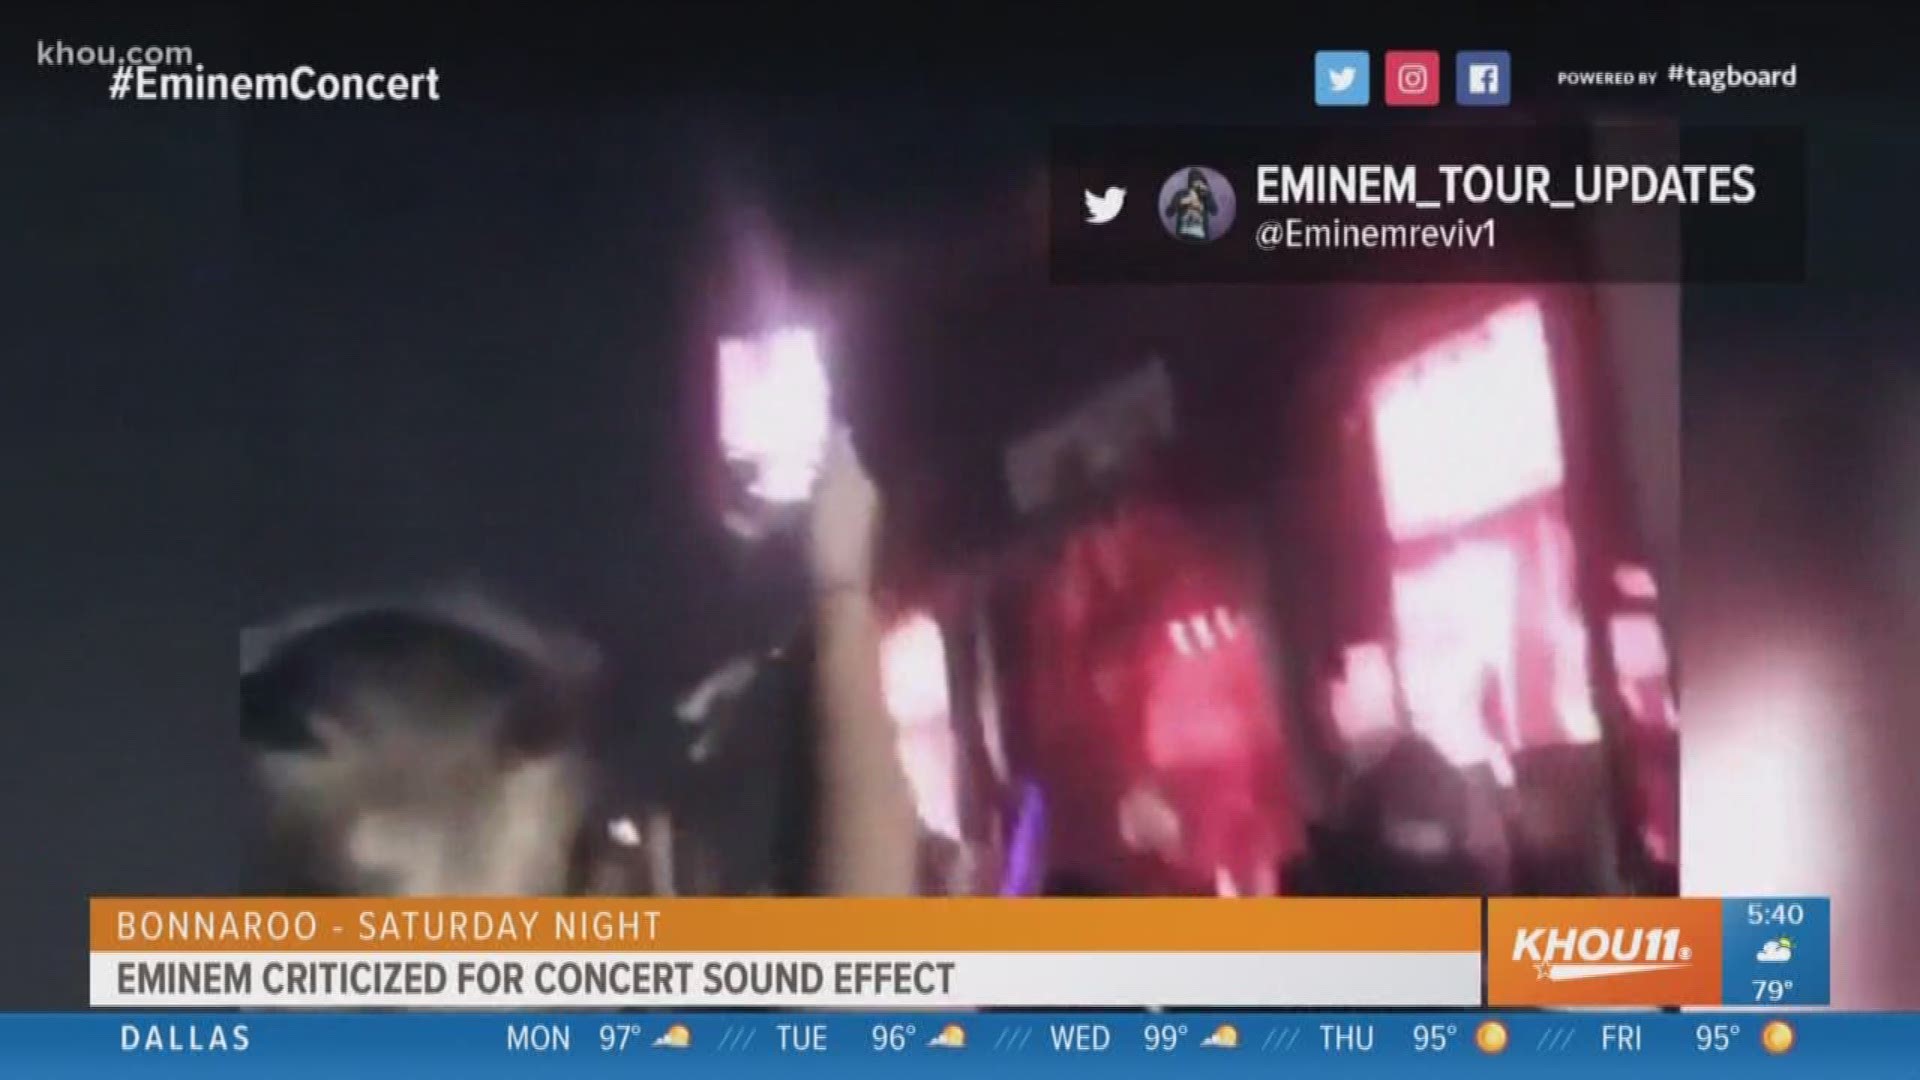 Eminem faces backlash over sound effects used at Bonnaroo